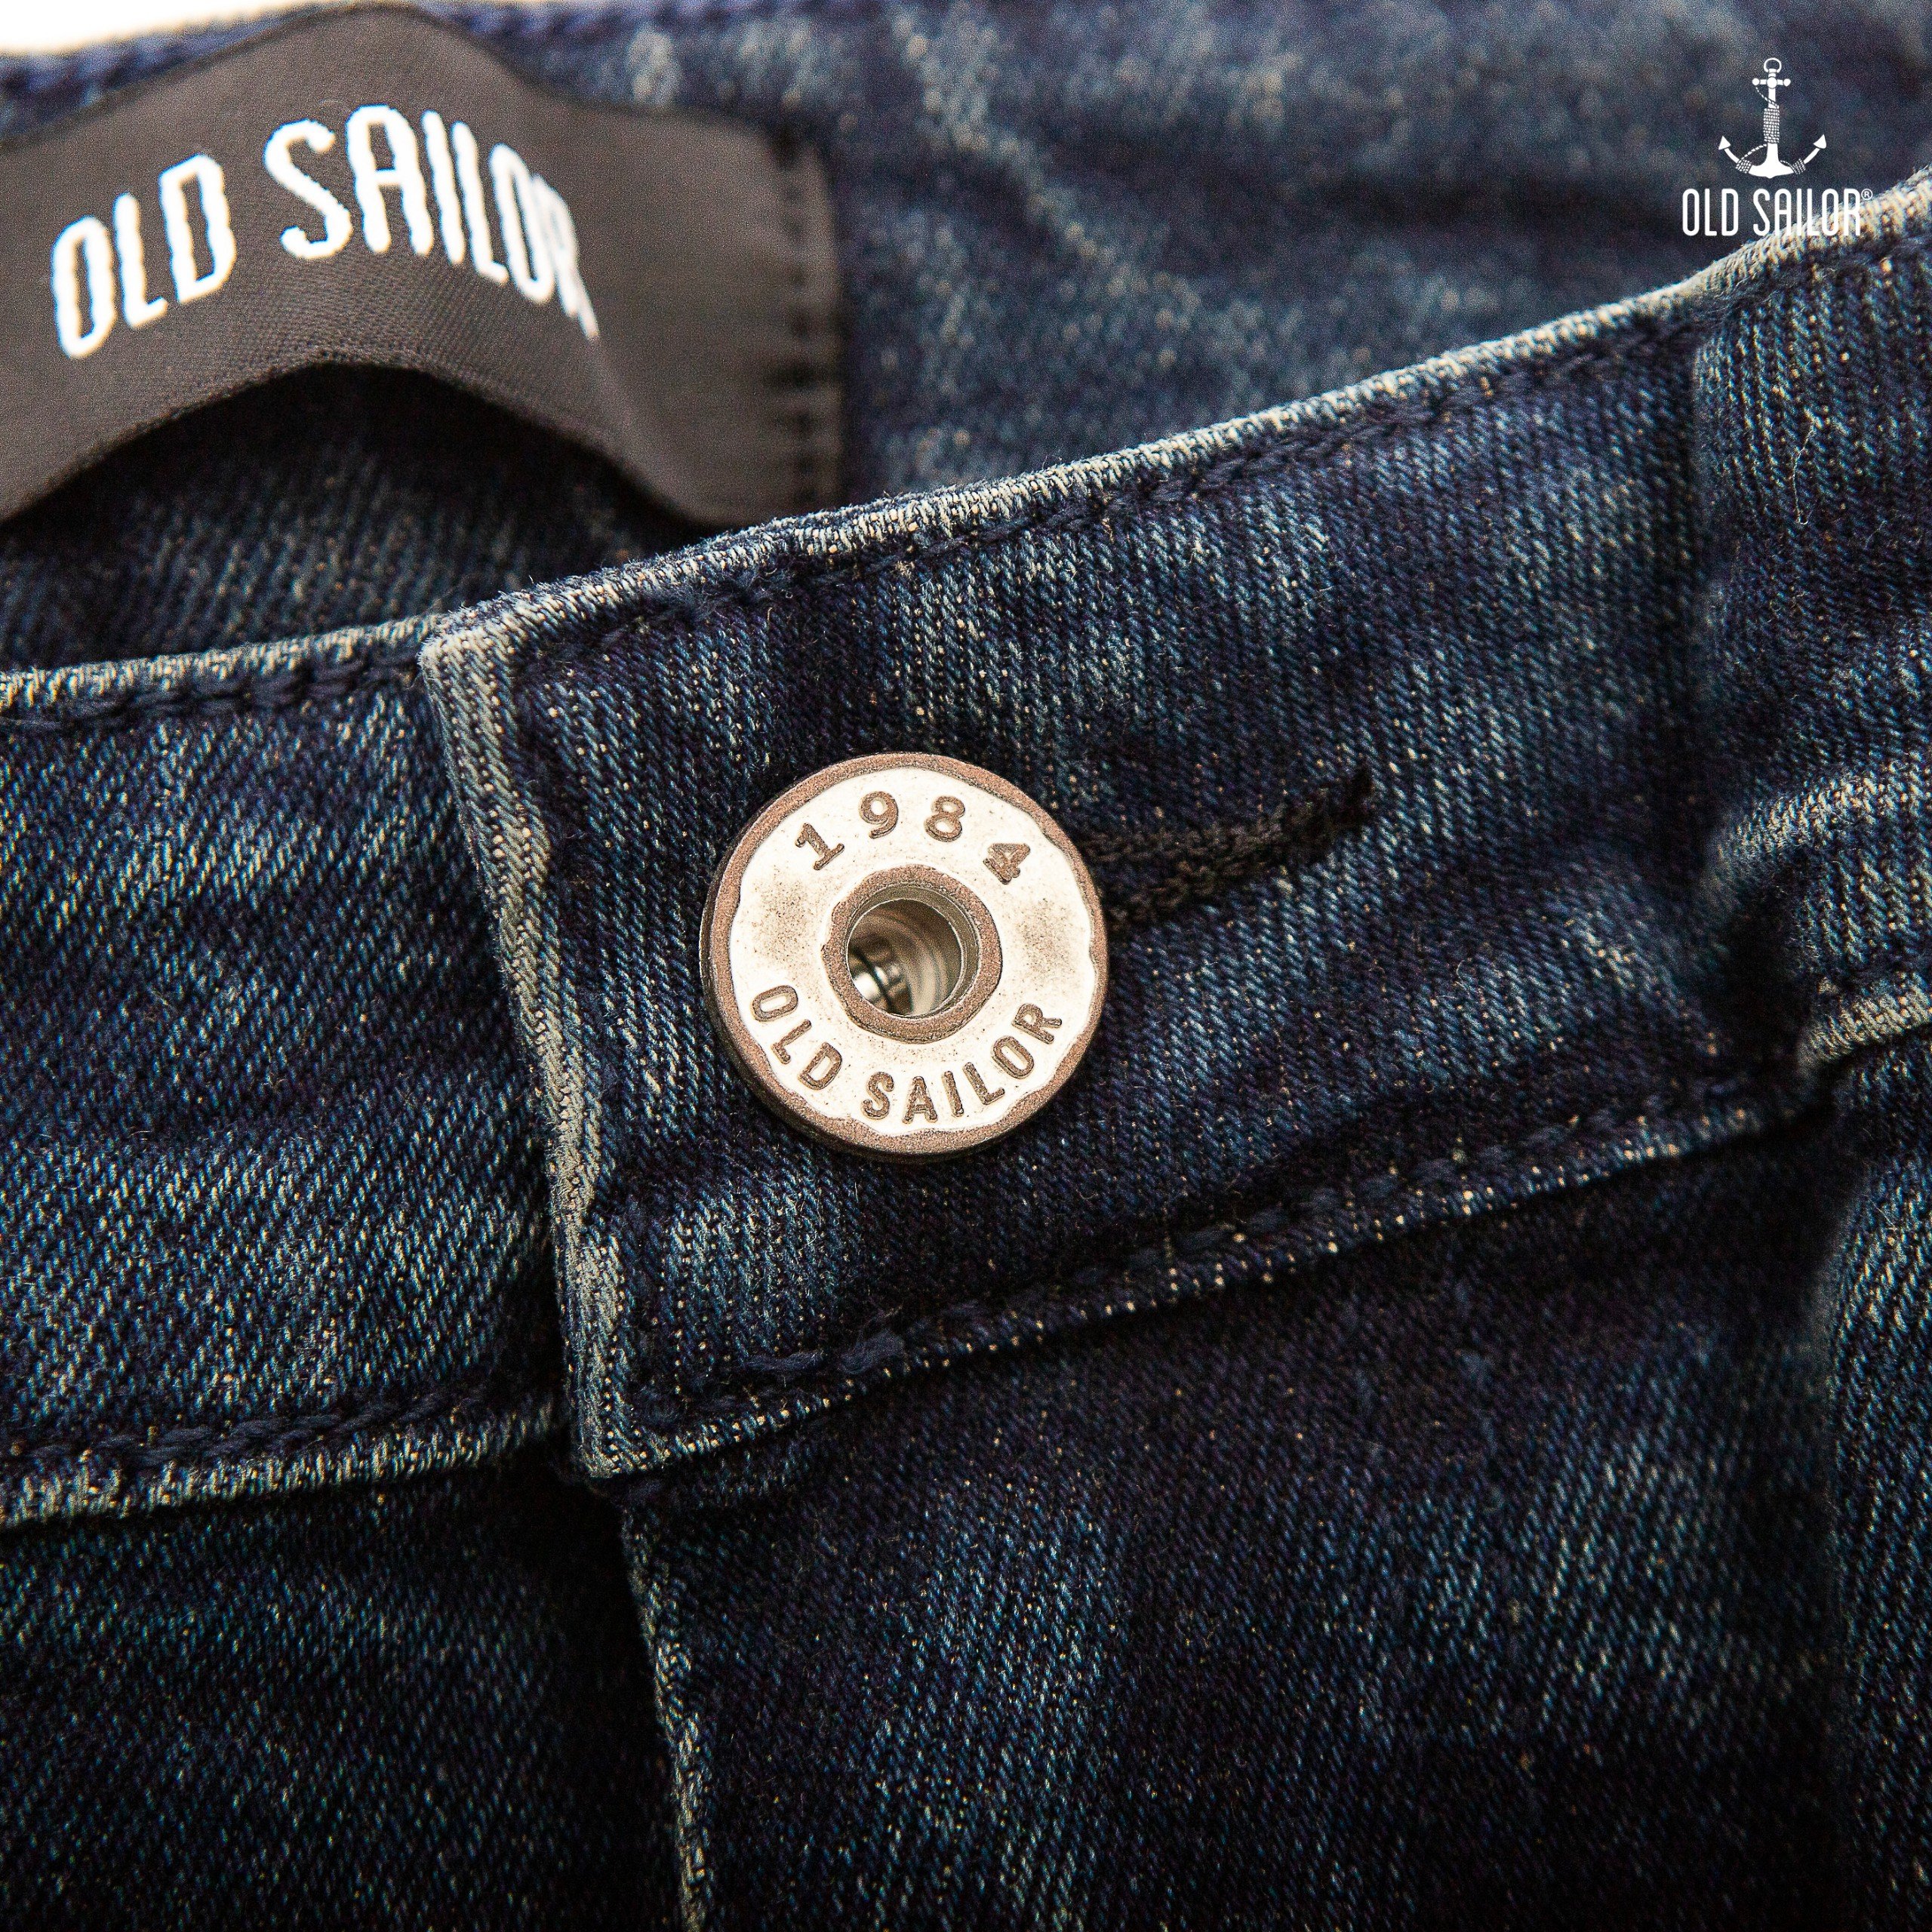 Quần jeans nam form slimfit premium Old Sailor - 6824 - Big size upto 42